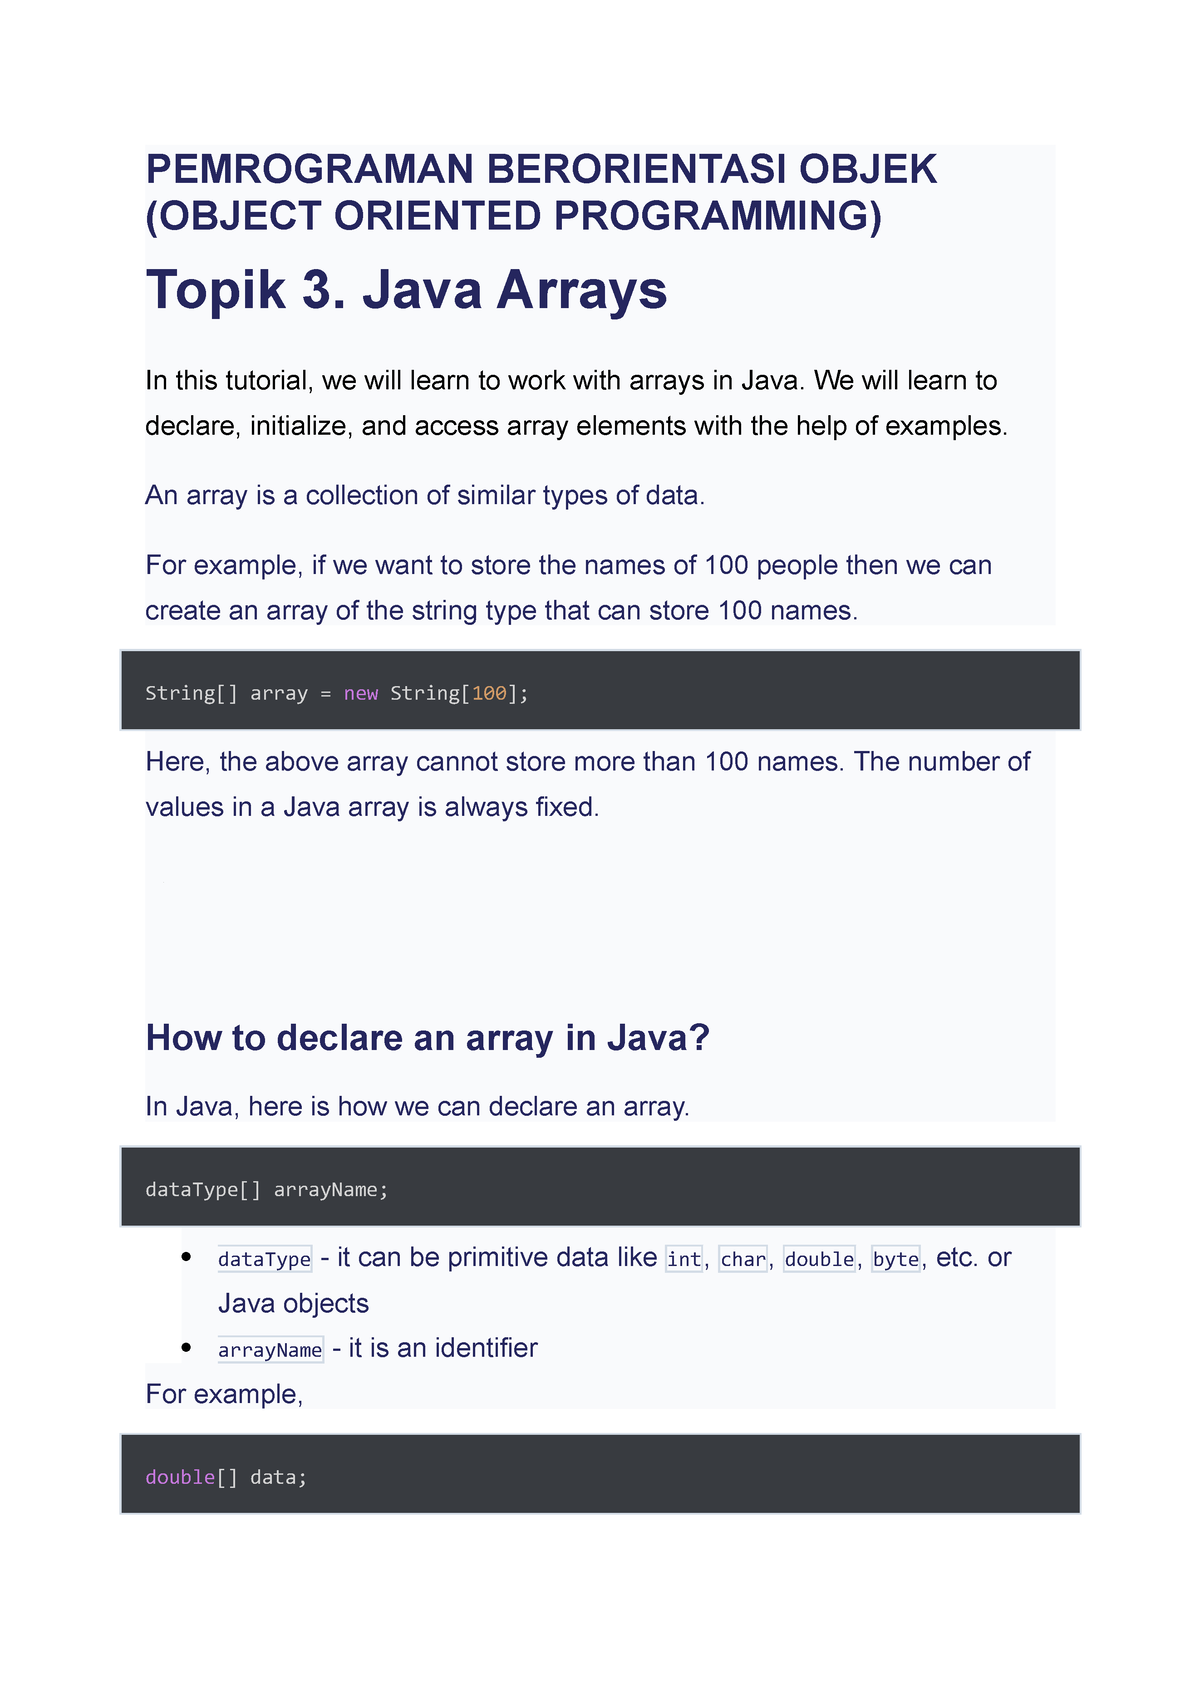 Topik 3 Oop Java Array Pemrograman Berorientasi Objek Object Oriented Programming Topik 5779